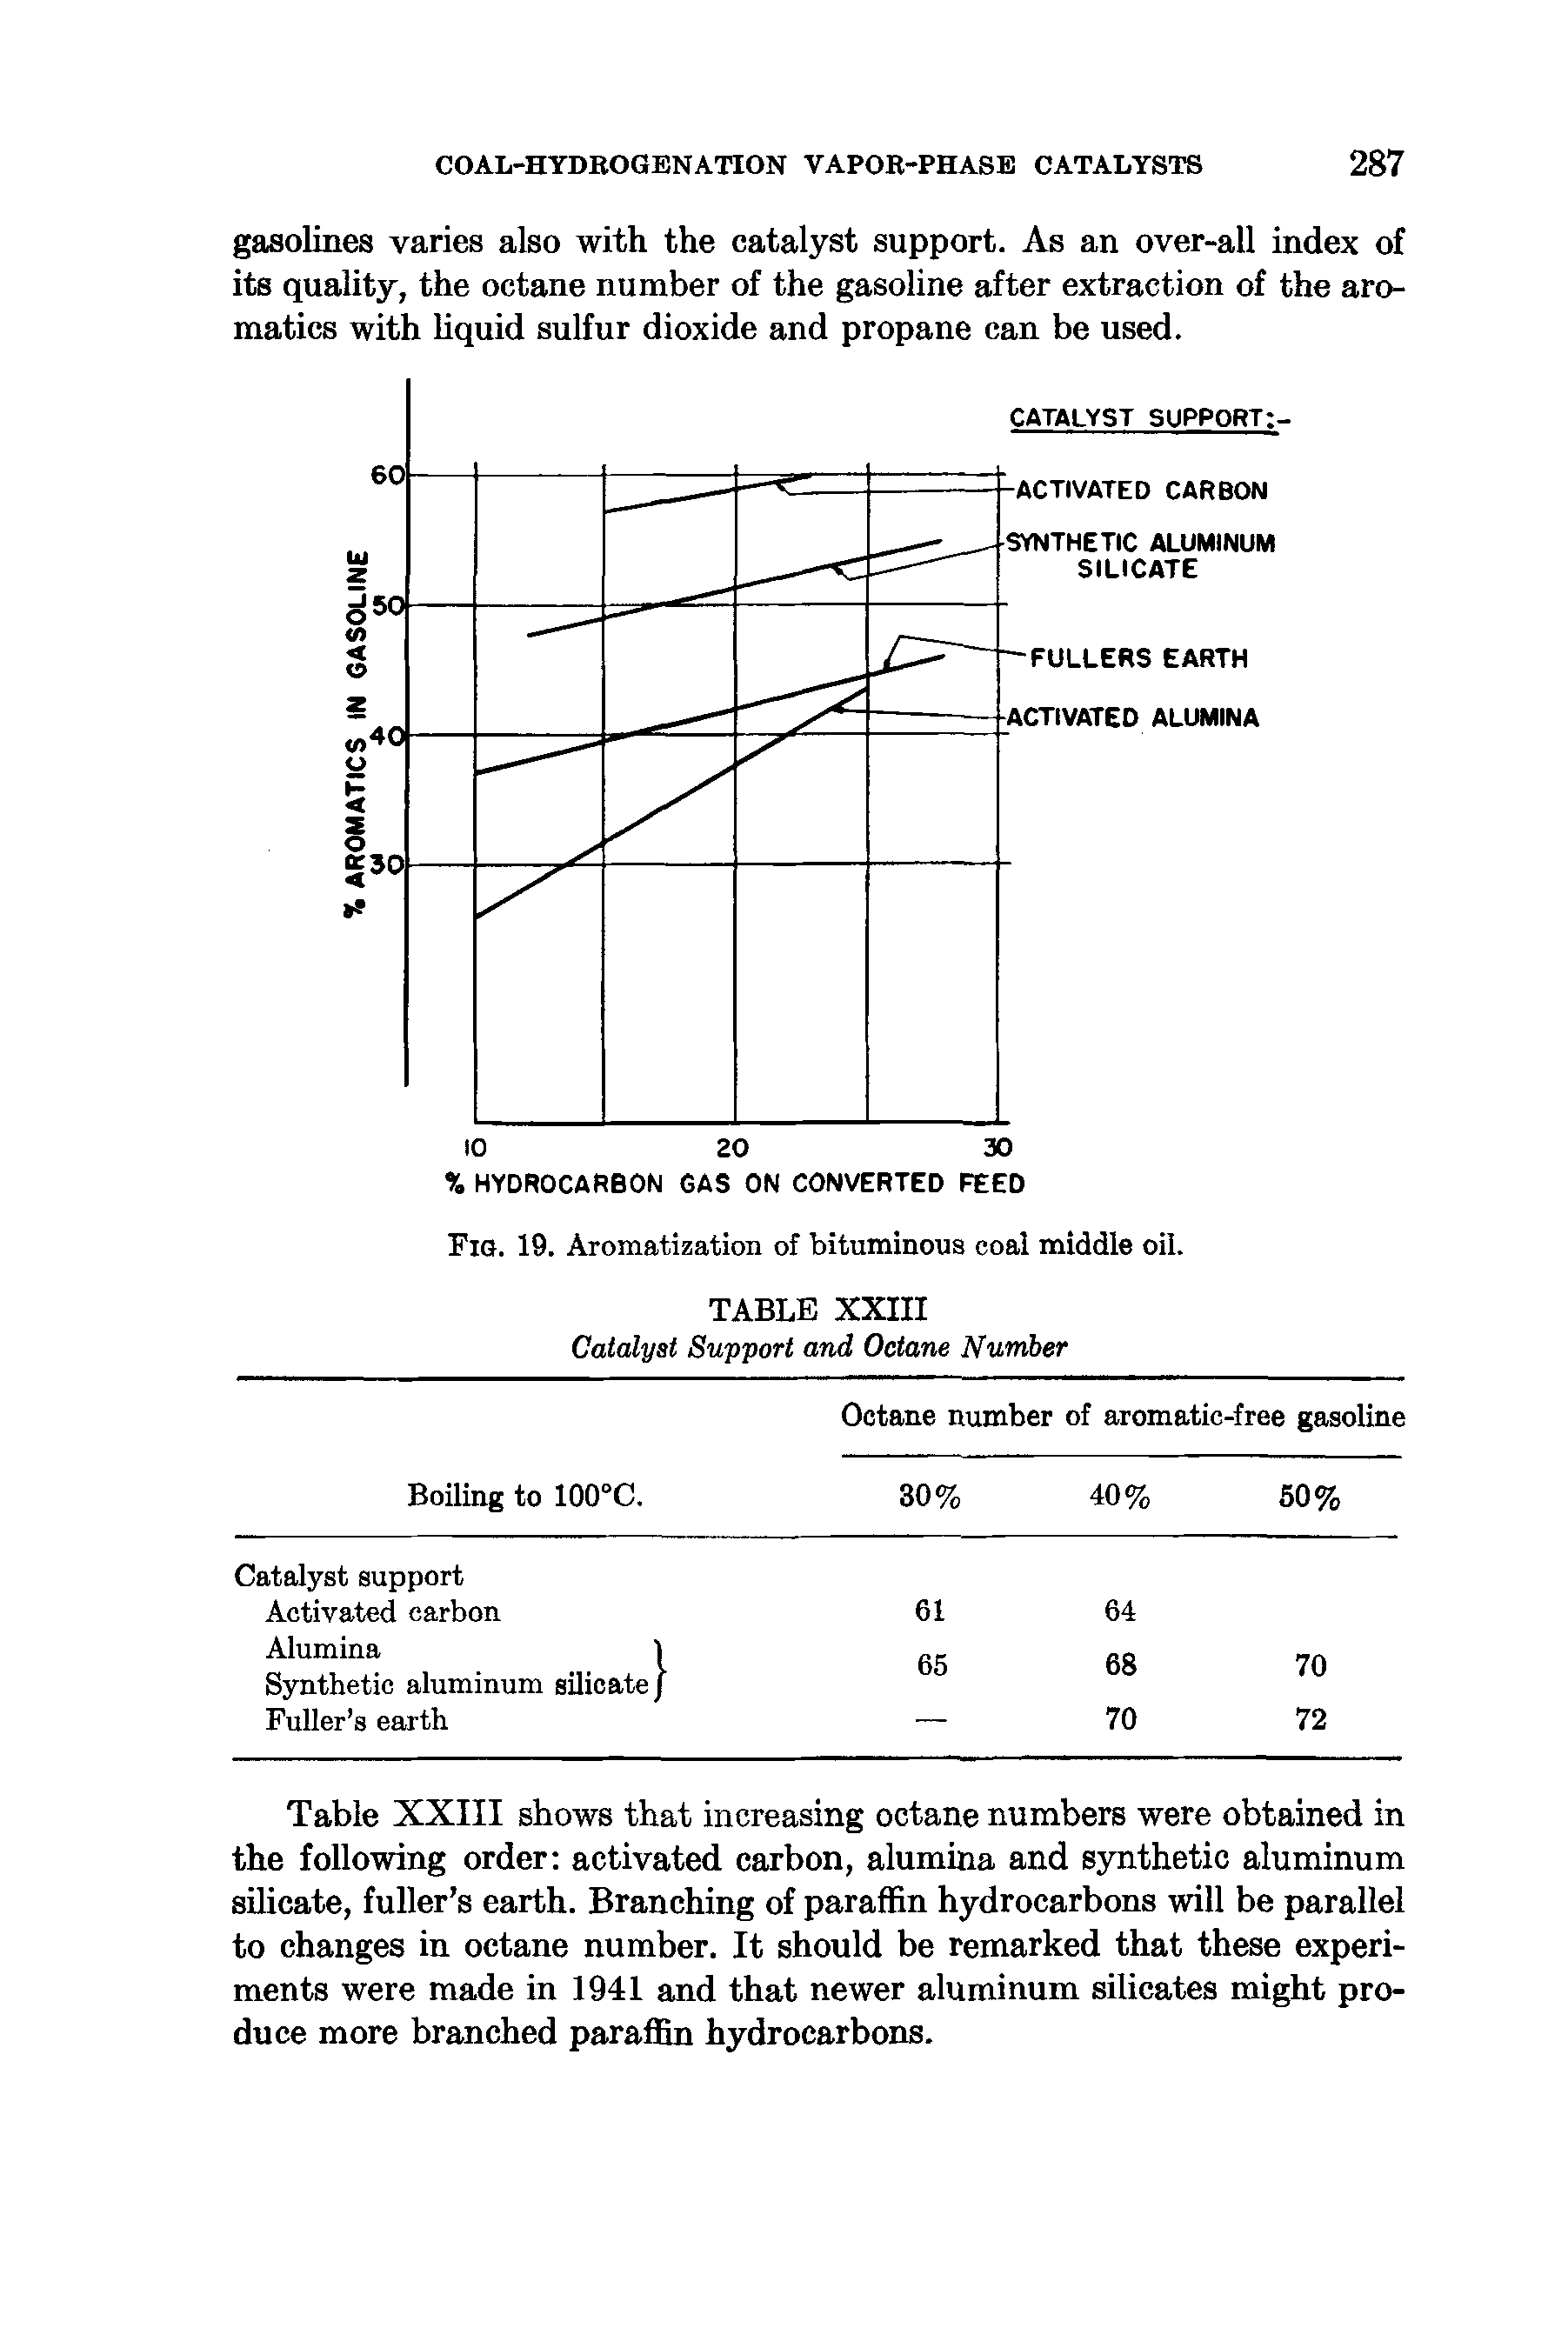 Fig. 19. Aromatization of bituminous coal middle oil. TABLE XXIII...